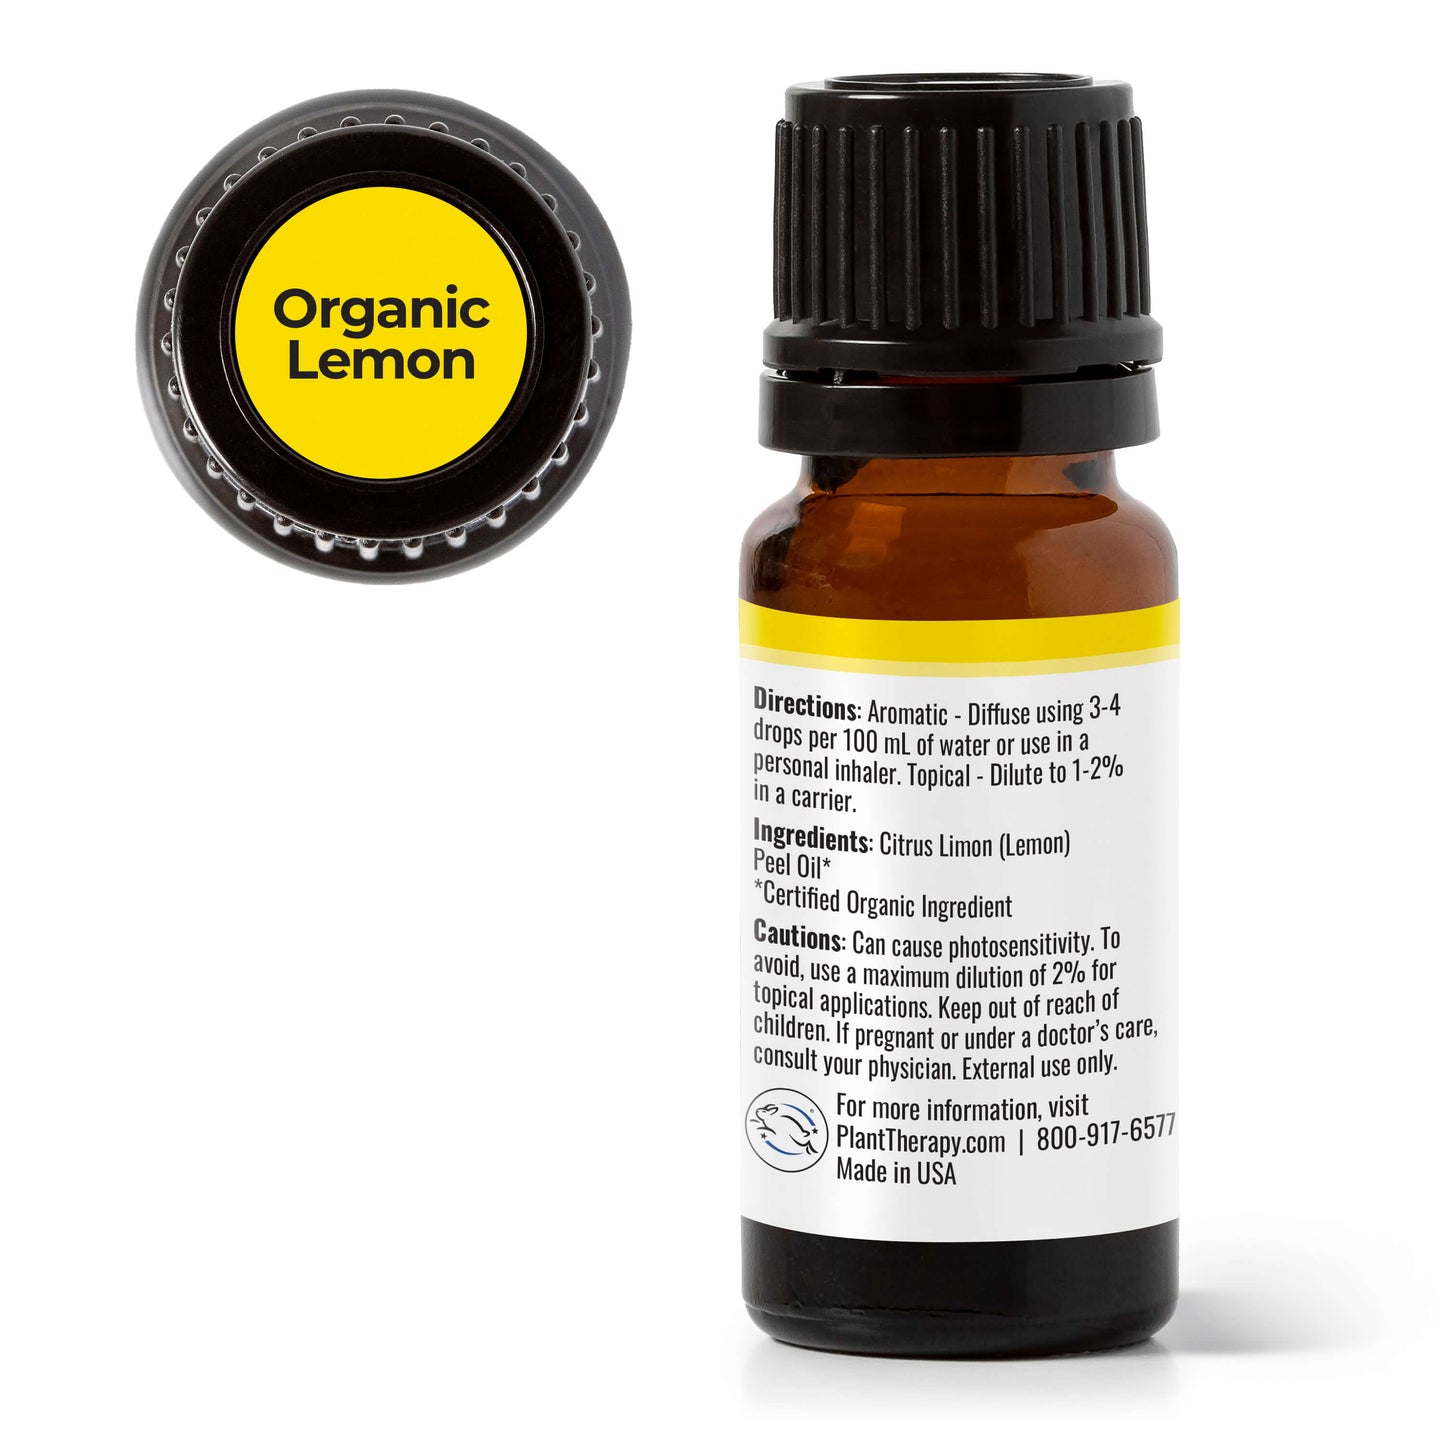 Organic Lemon Essential Oil back label